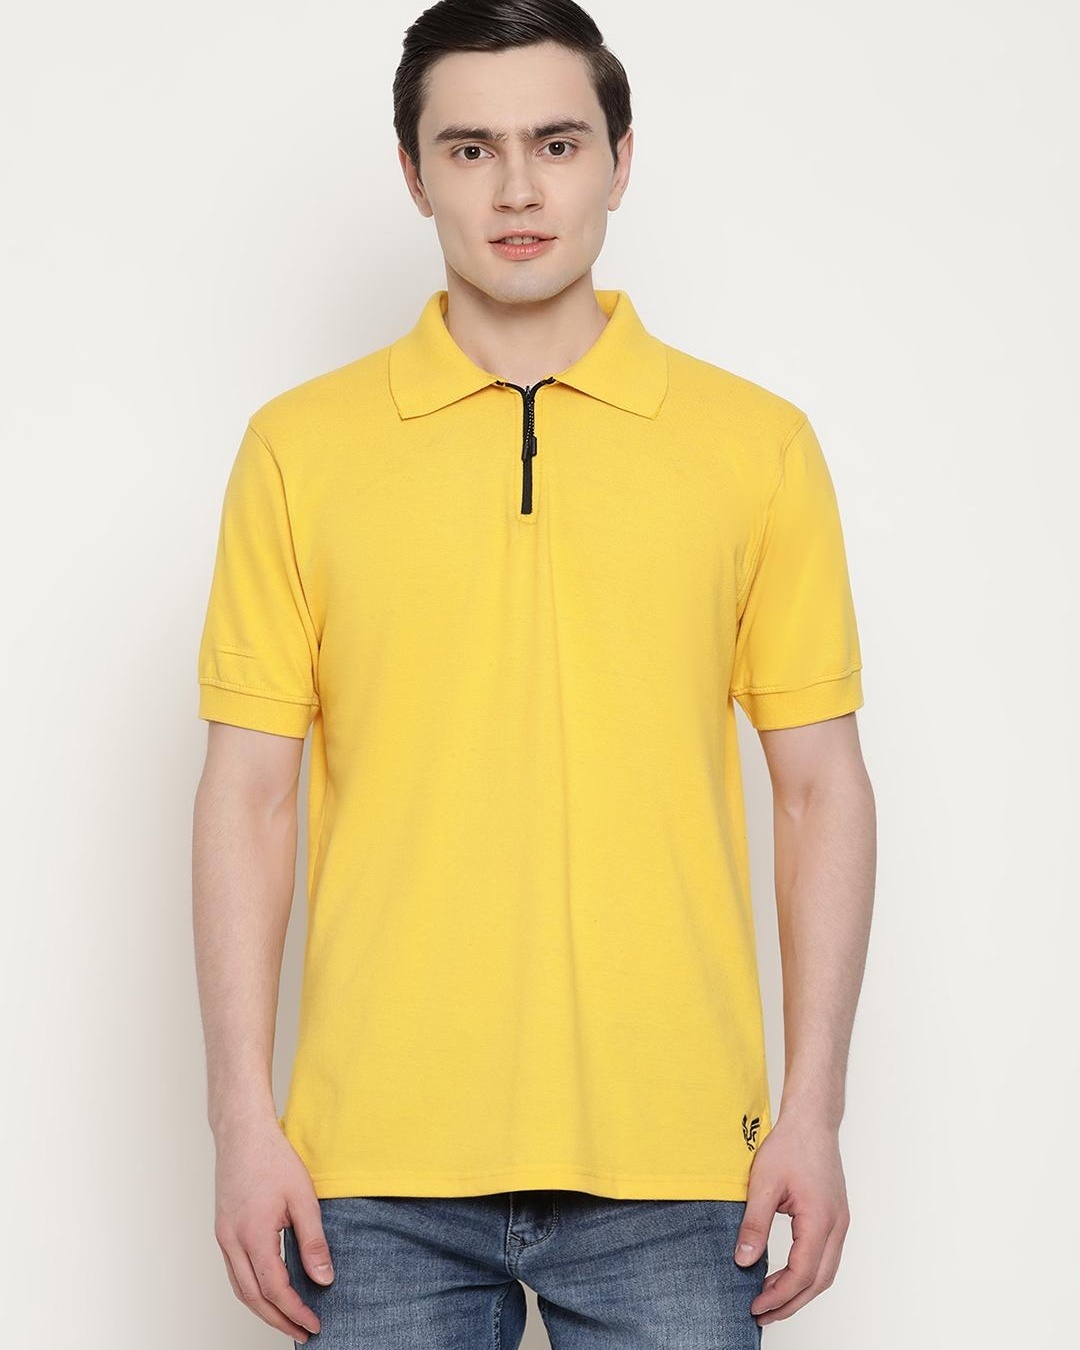 Buy Men's Yellow Polo T-shirt for Men Yellow Online at Bewakoof